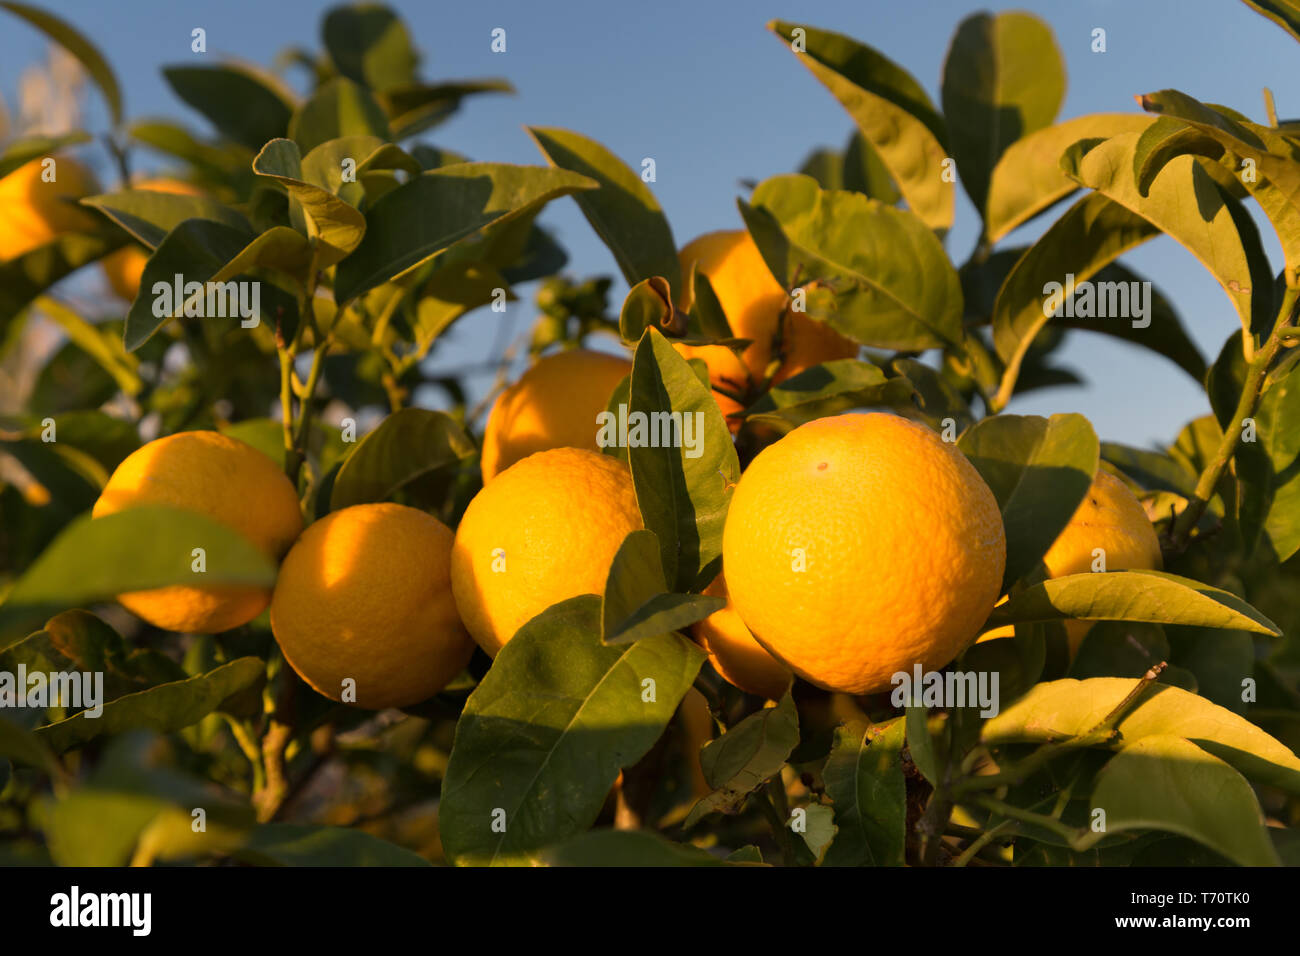 Ripe oranges on a tree Stock Photo